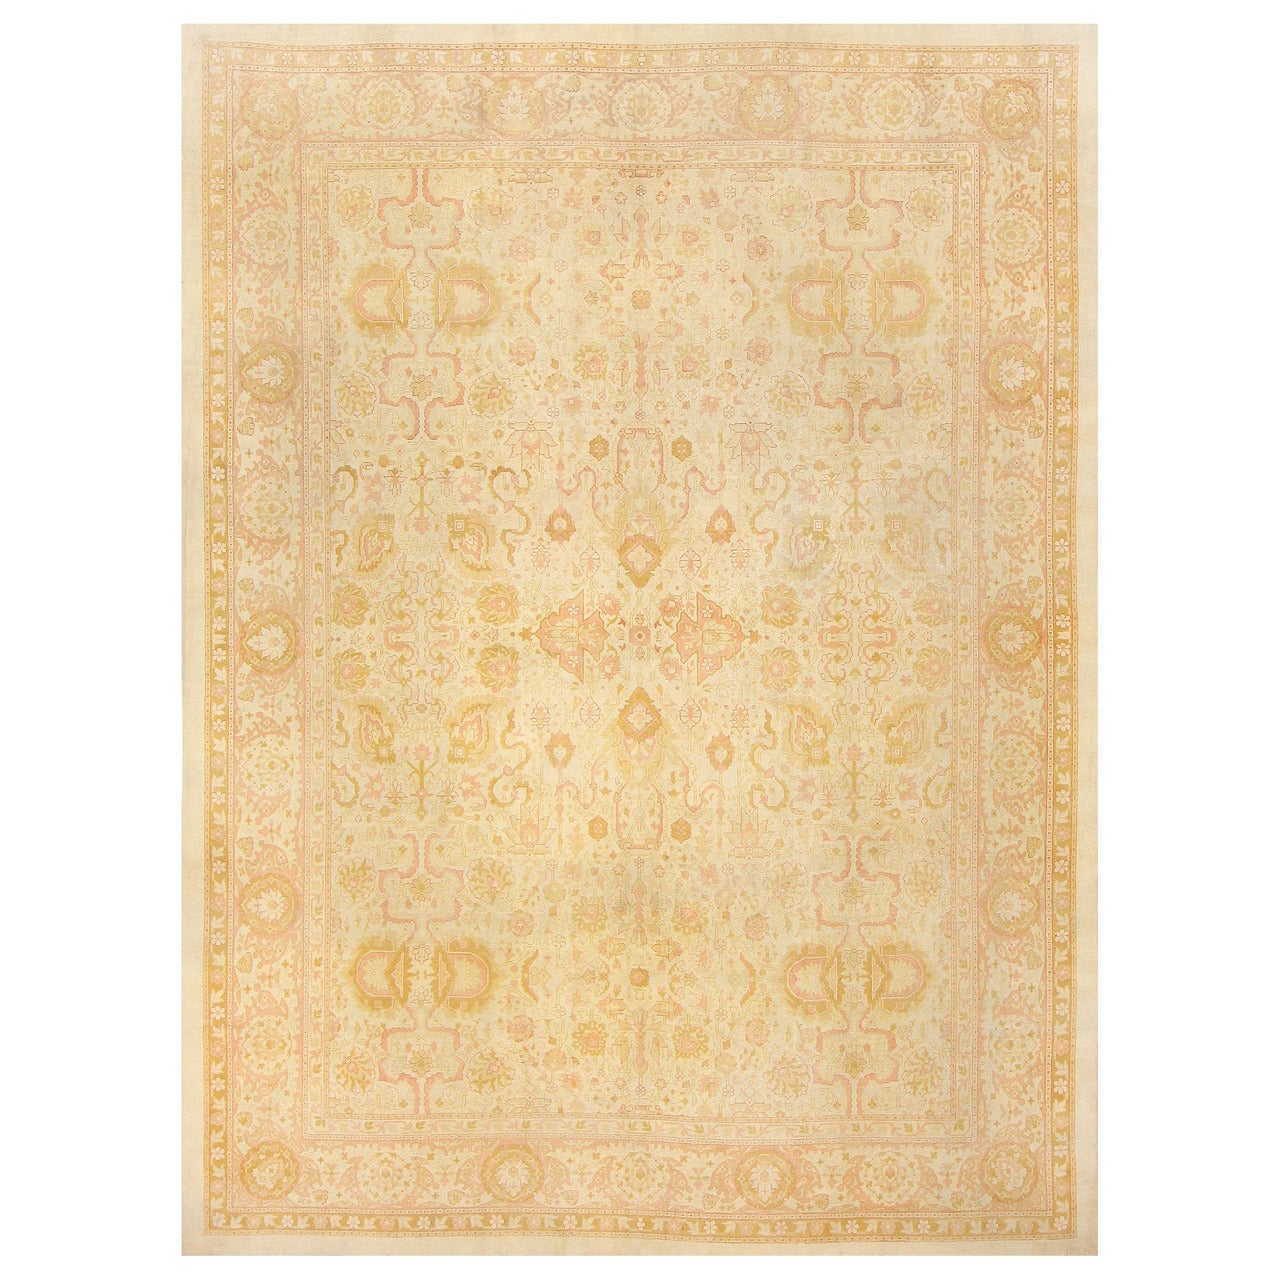 Antique Indian Amritsar Carpet 48001